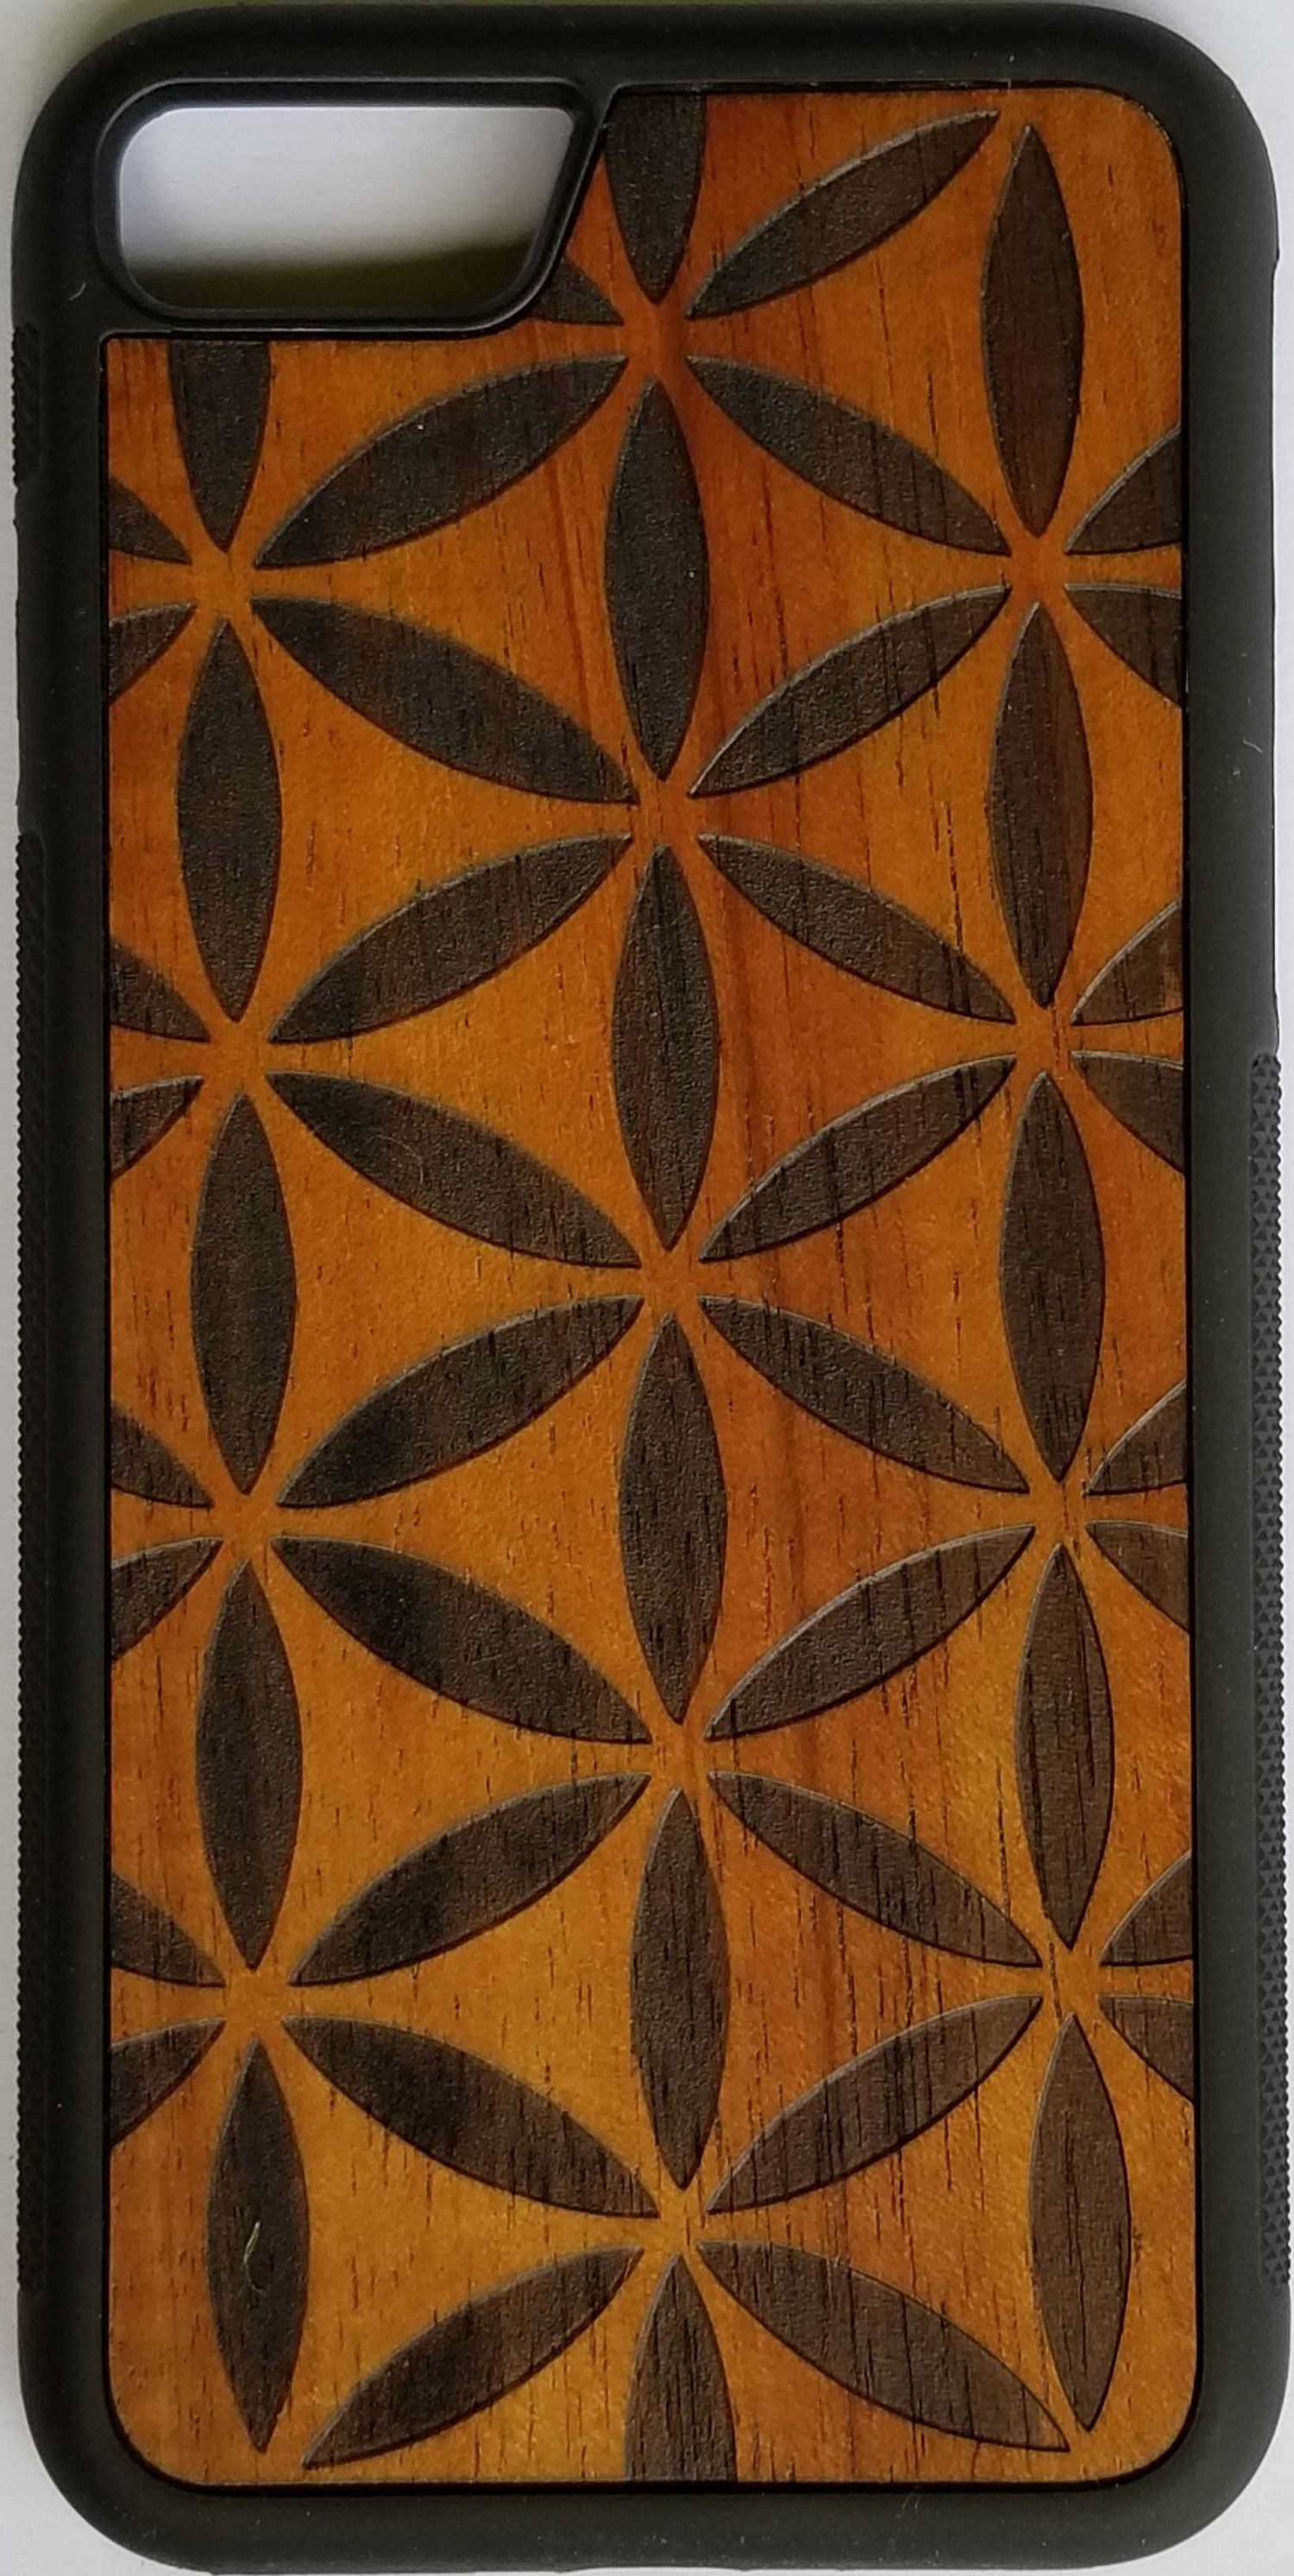 Image of Flower of life "wall paper" Koa wood phone case